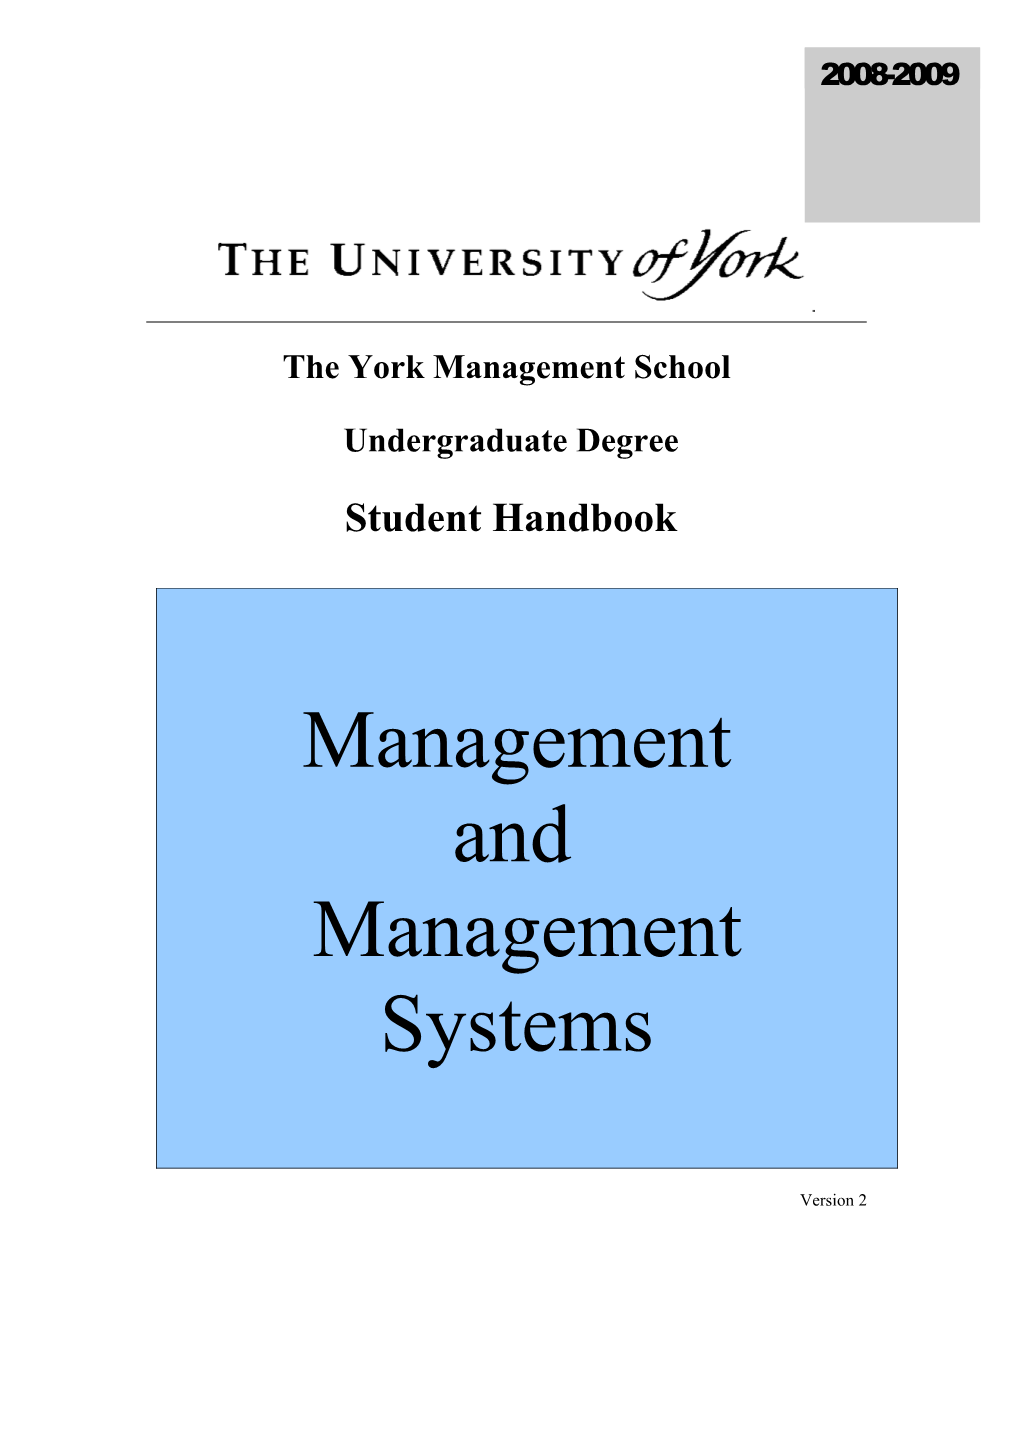 MITL Student Handbook